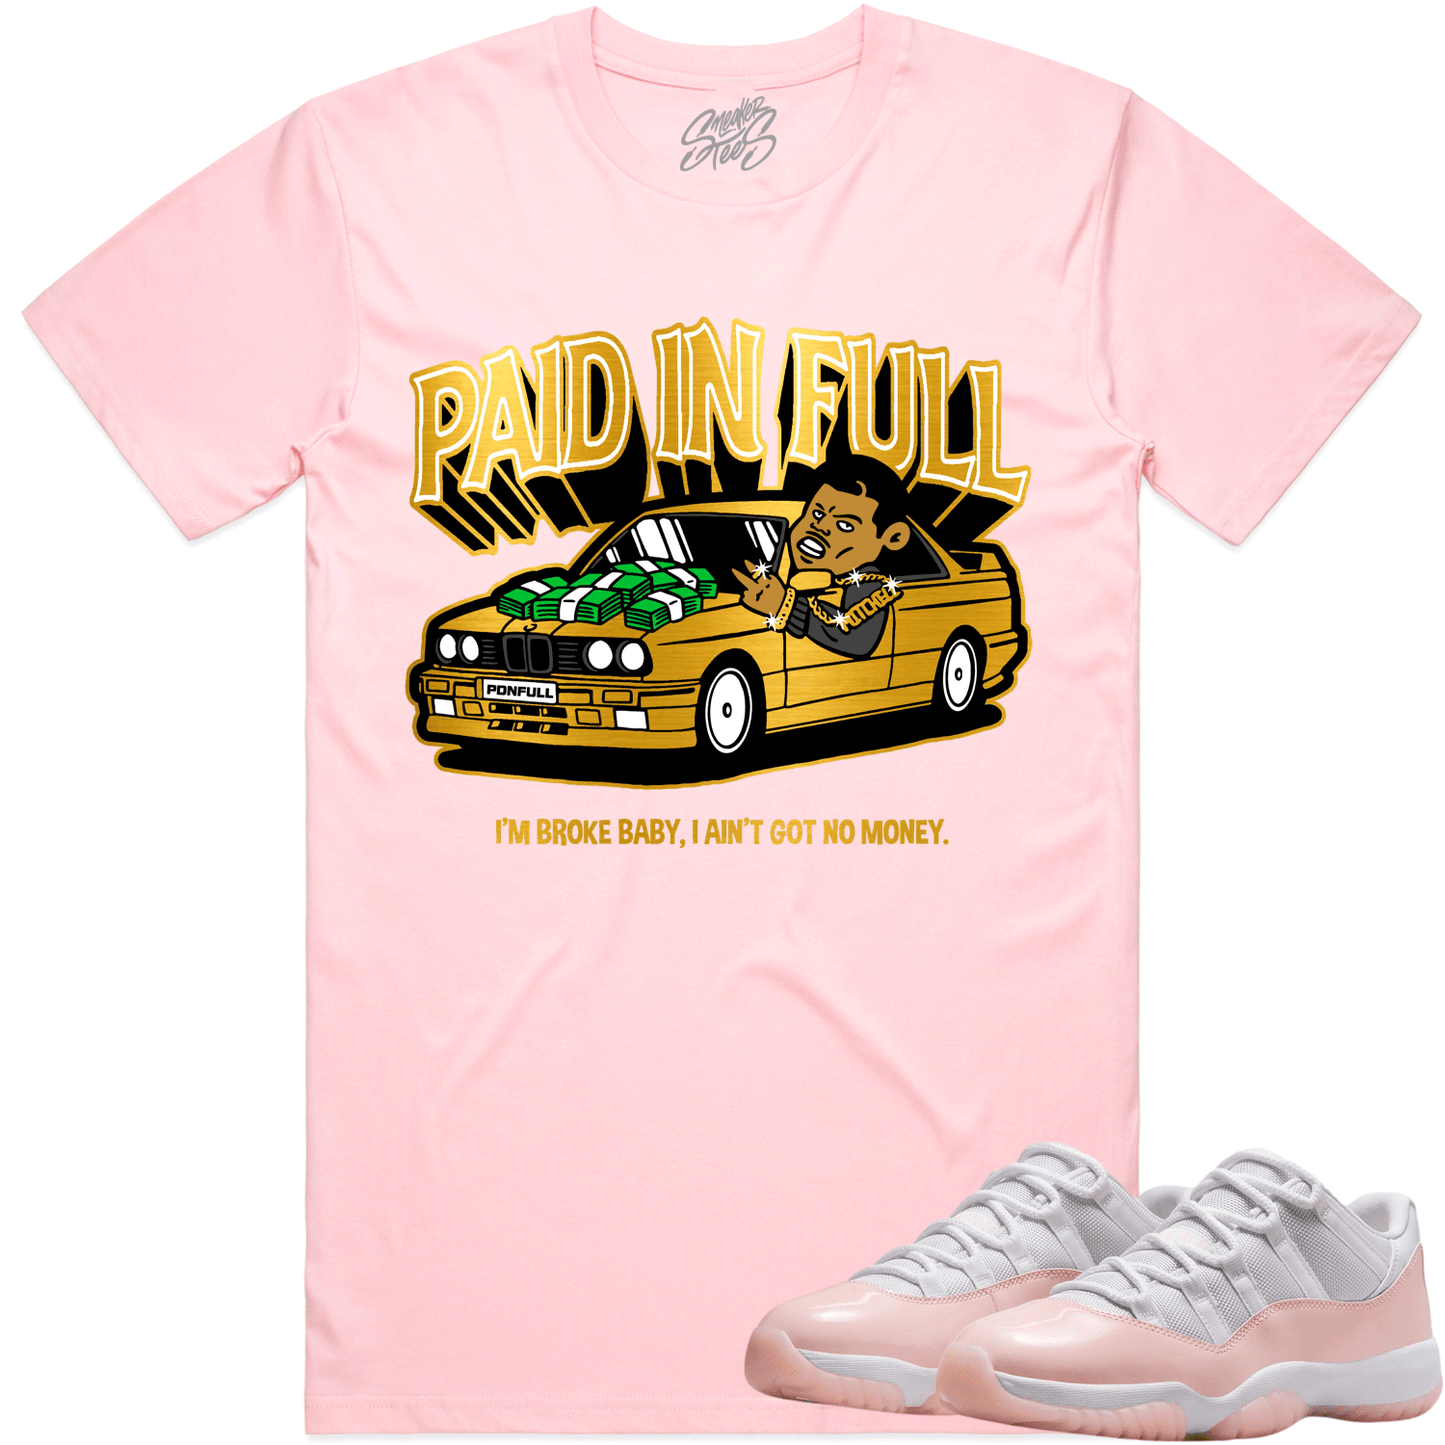 Legend Pink 11s Shirt - Jordan 11 Low Pink Sneaker Tees - Paid